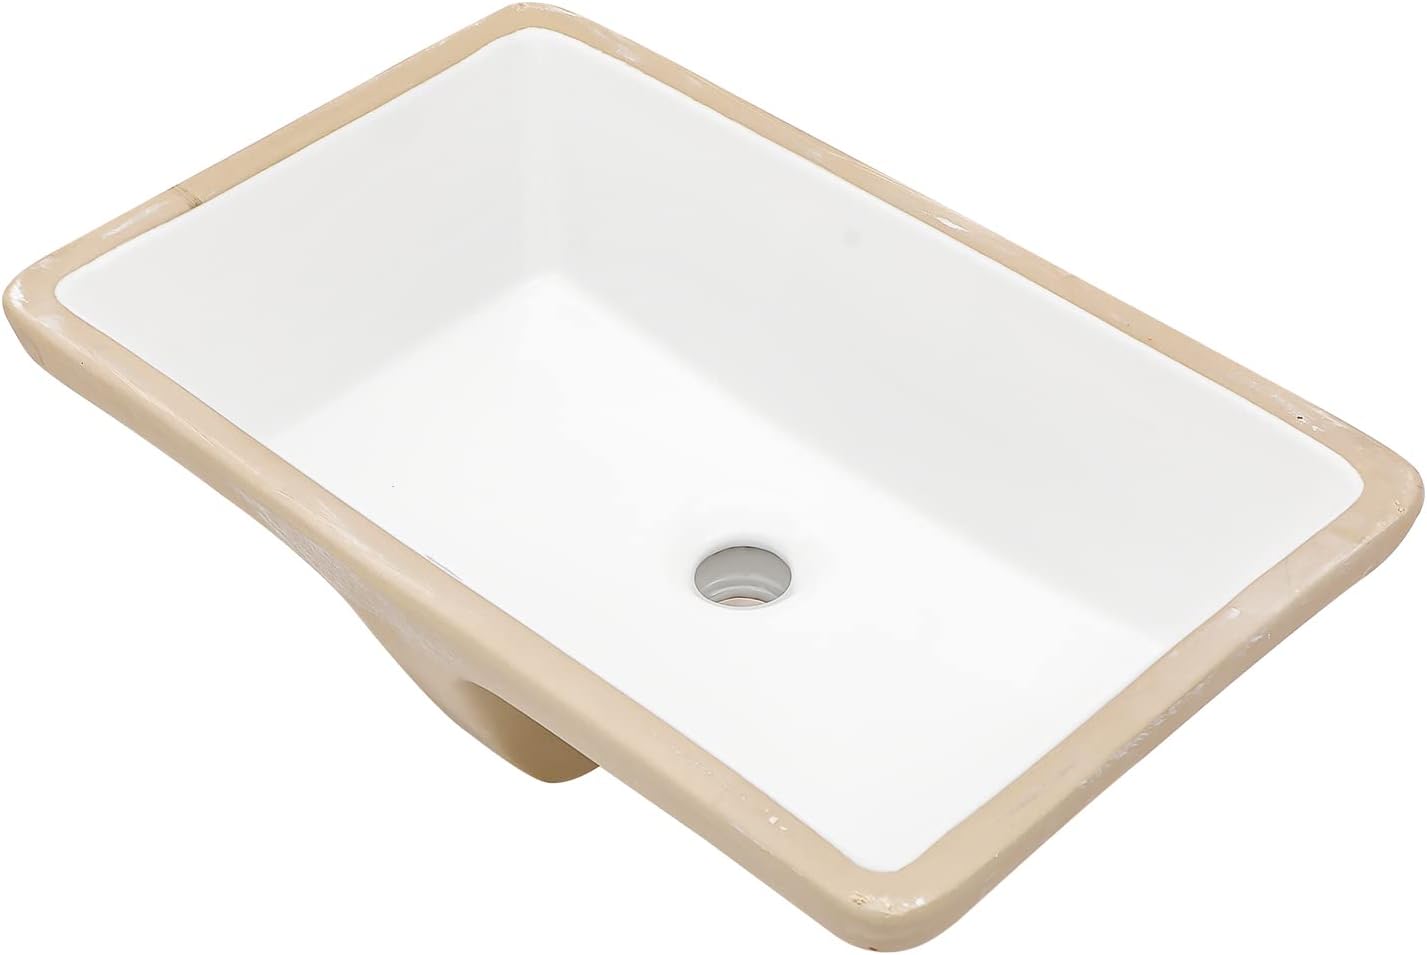 Lordear 28in Undermount Bathroom Sink Rectangular Pure White Vitreous Ceramic Lavatory Vanity Vessel Sinks | Bathroom, Bathroom Basin, Bathroom Ceramic Sinks, Bathroom Sinks, big sale | Lordear